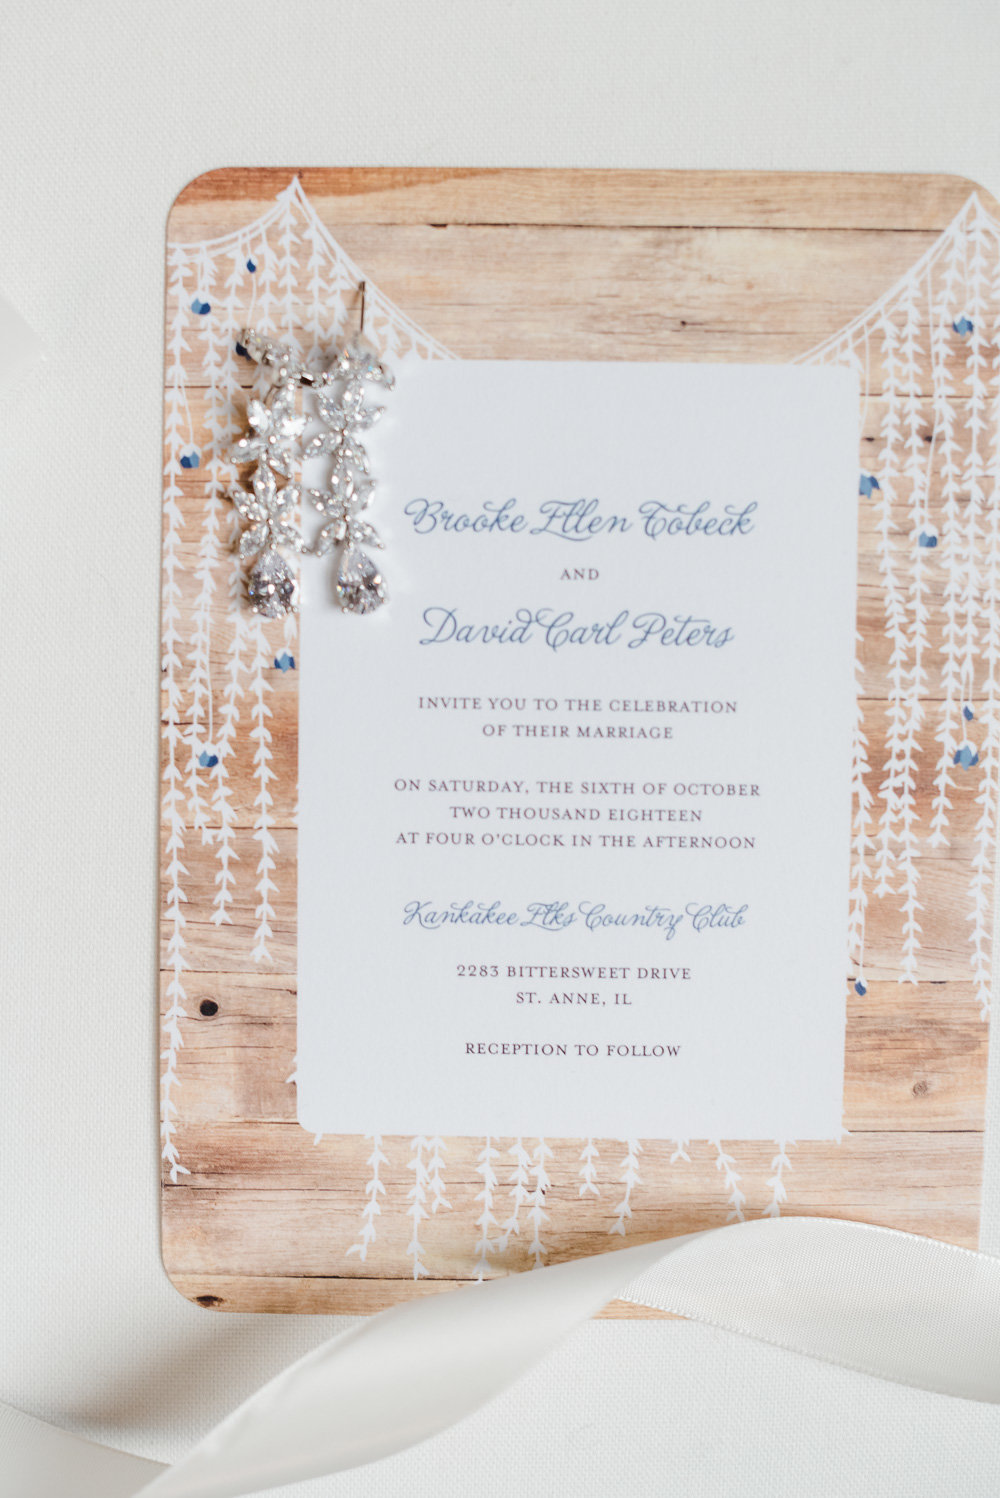 A bright image of a wedding invitation